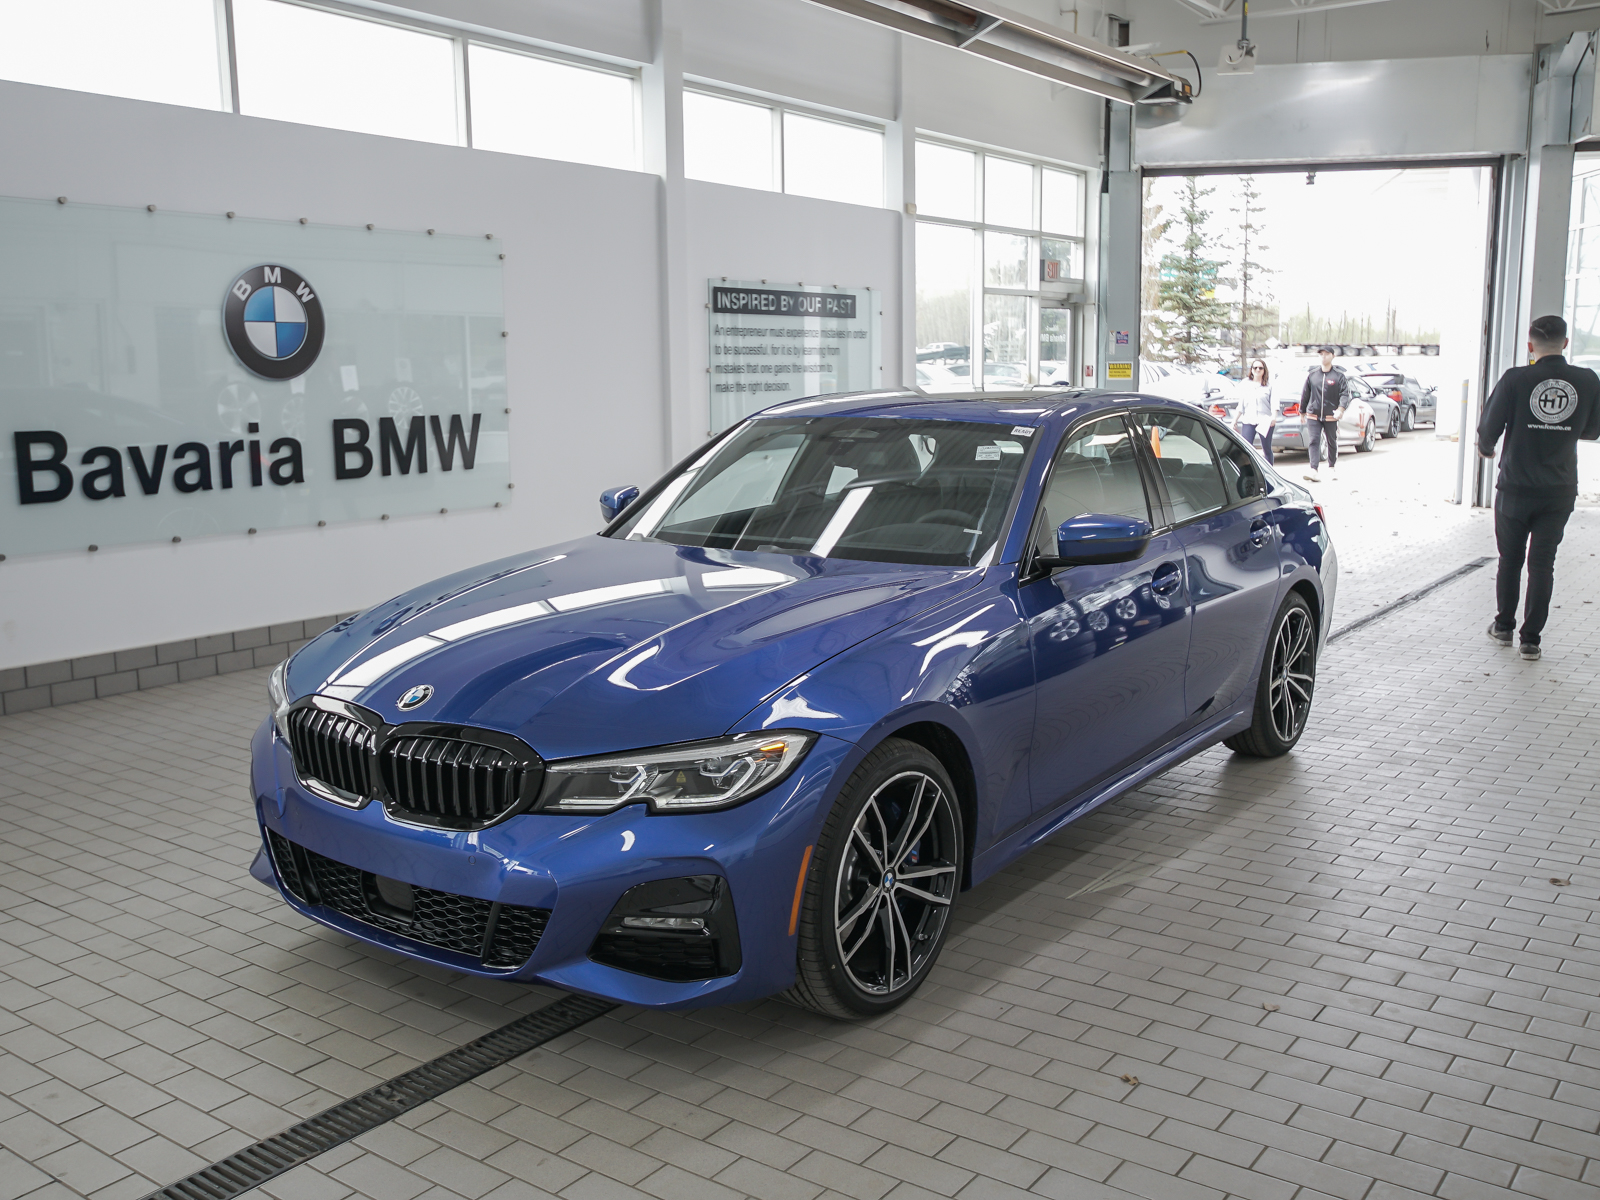 New 2019 BMW 330i xDrive Sedan Sedan in Edmonton #193S3019 | Bavaria BMW